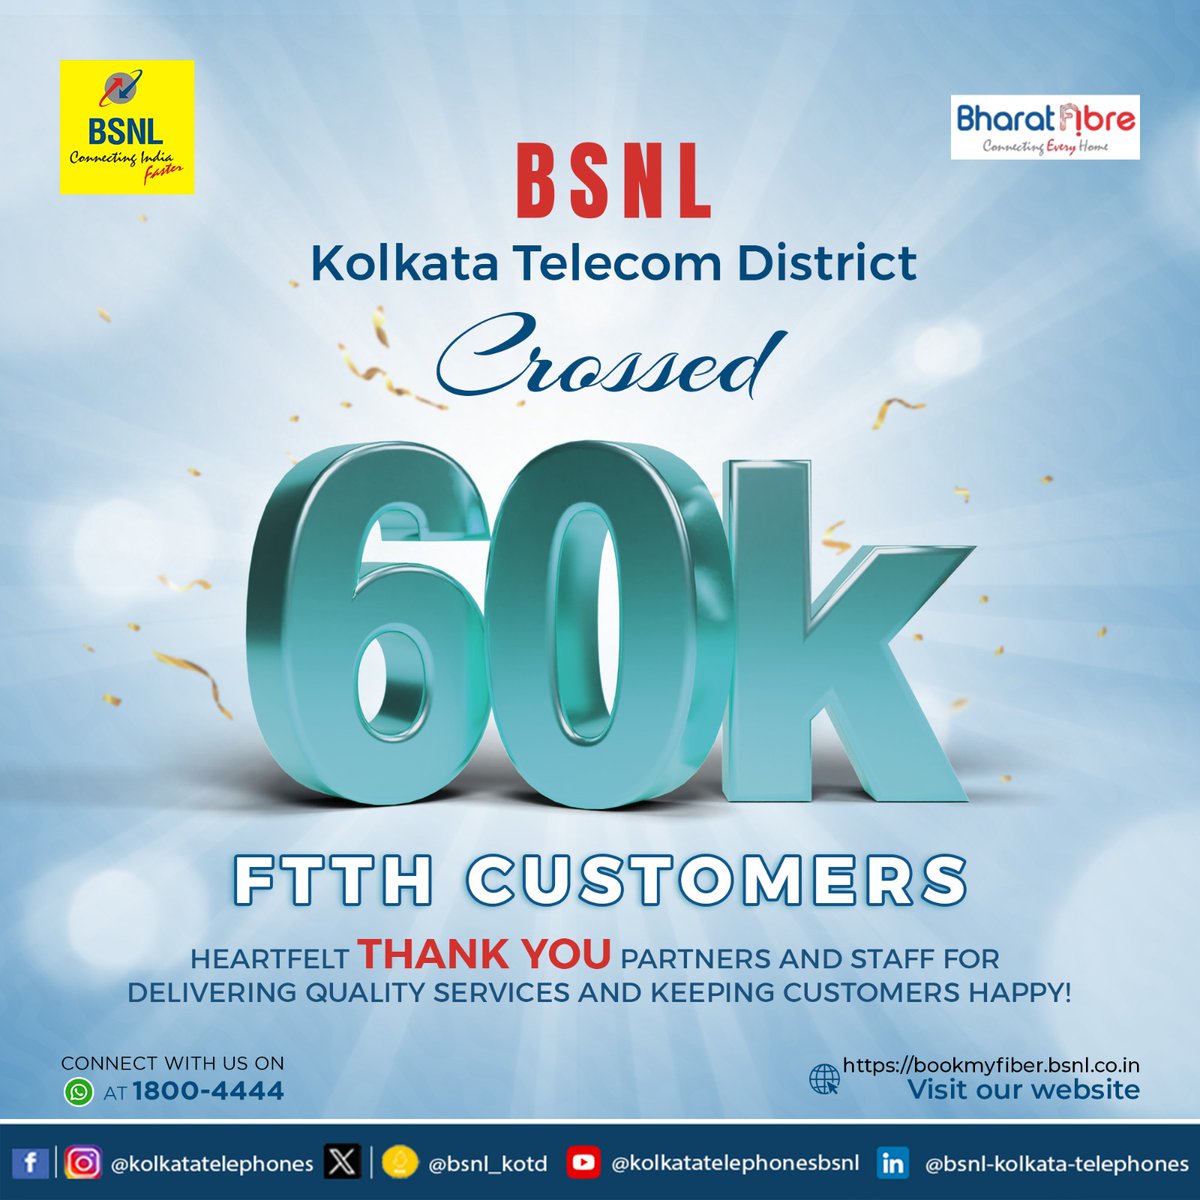 🎉🎉🎉 Celebrating a milestone! BSNL's Kolkata Telecom District has crossed 60K FTTH customers. A heartfelt thanks to our valued partners and dedicated staffs. 
 #60kcustomerbase #BSNL #FTTH #Fibrebroadband #HighspeedInternet #UnlimitedData